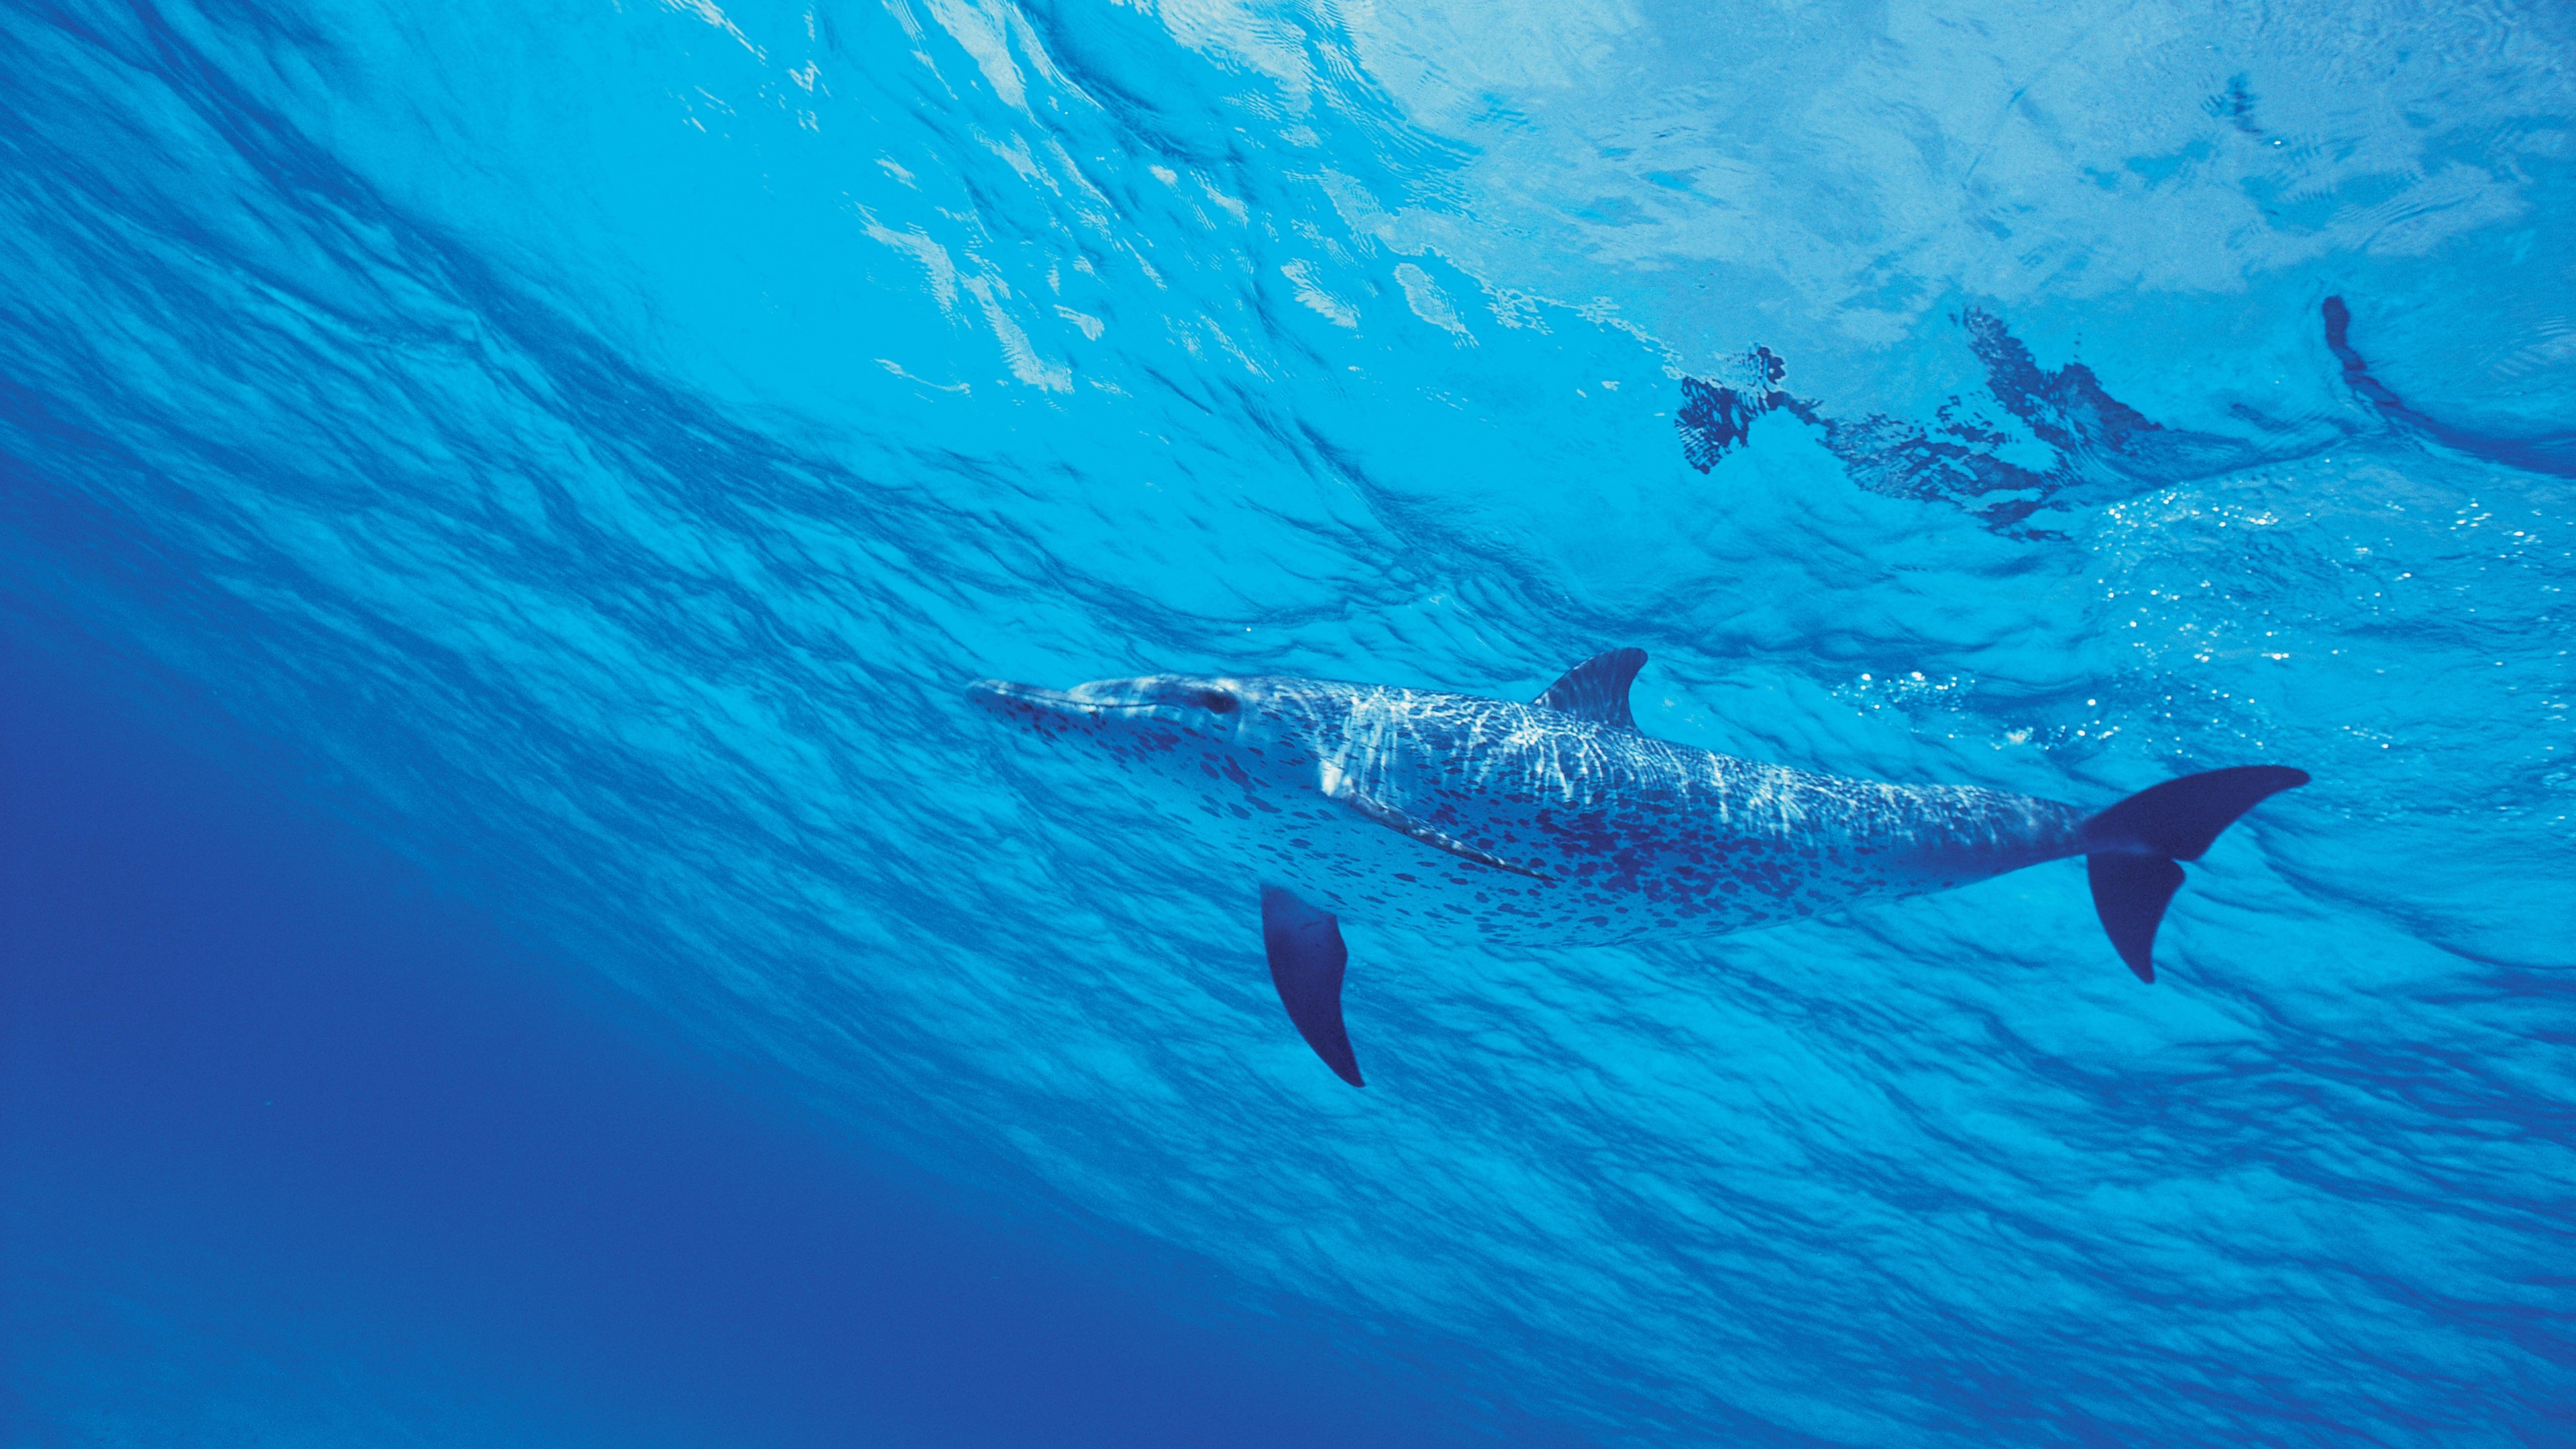 General 3840x2160 dolphin sea water underwater nature animals minimalism simple background